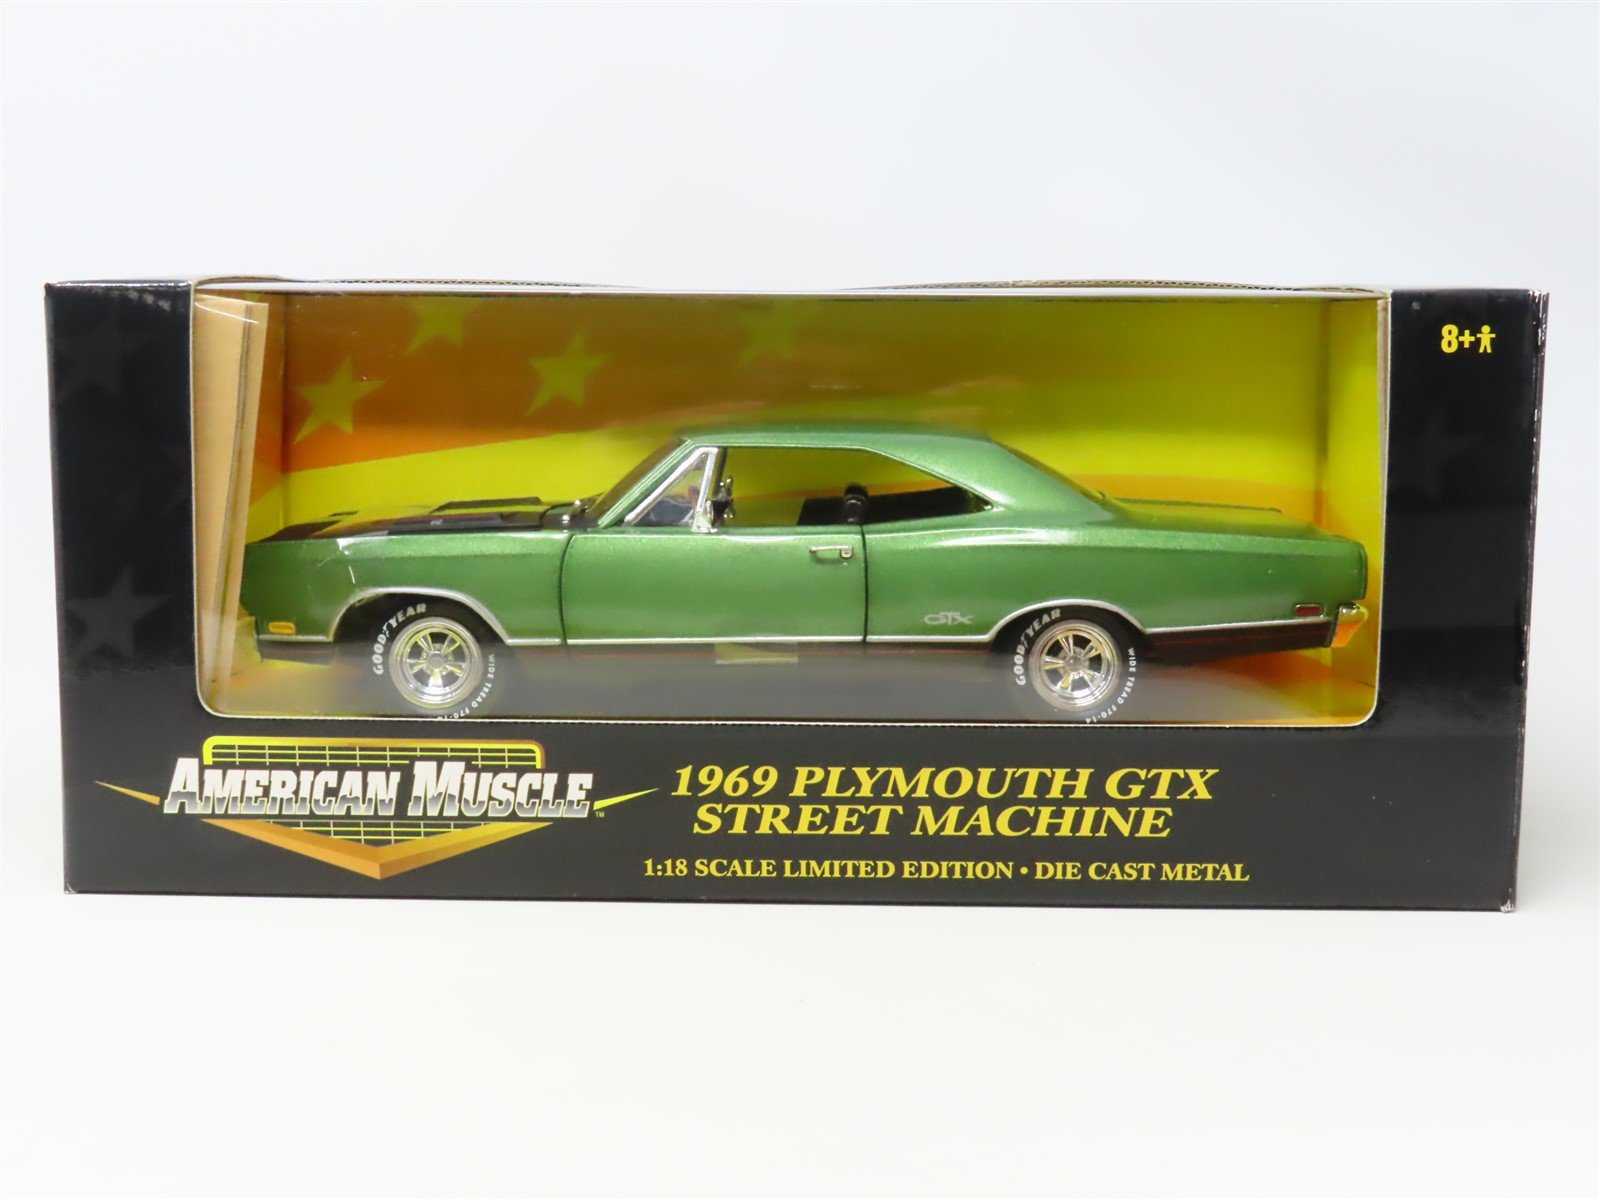 1:18 Scale Ertl American Muscle #32520 Green 1969 Plymouth GTX Street Machine